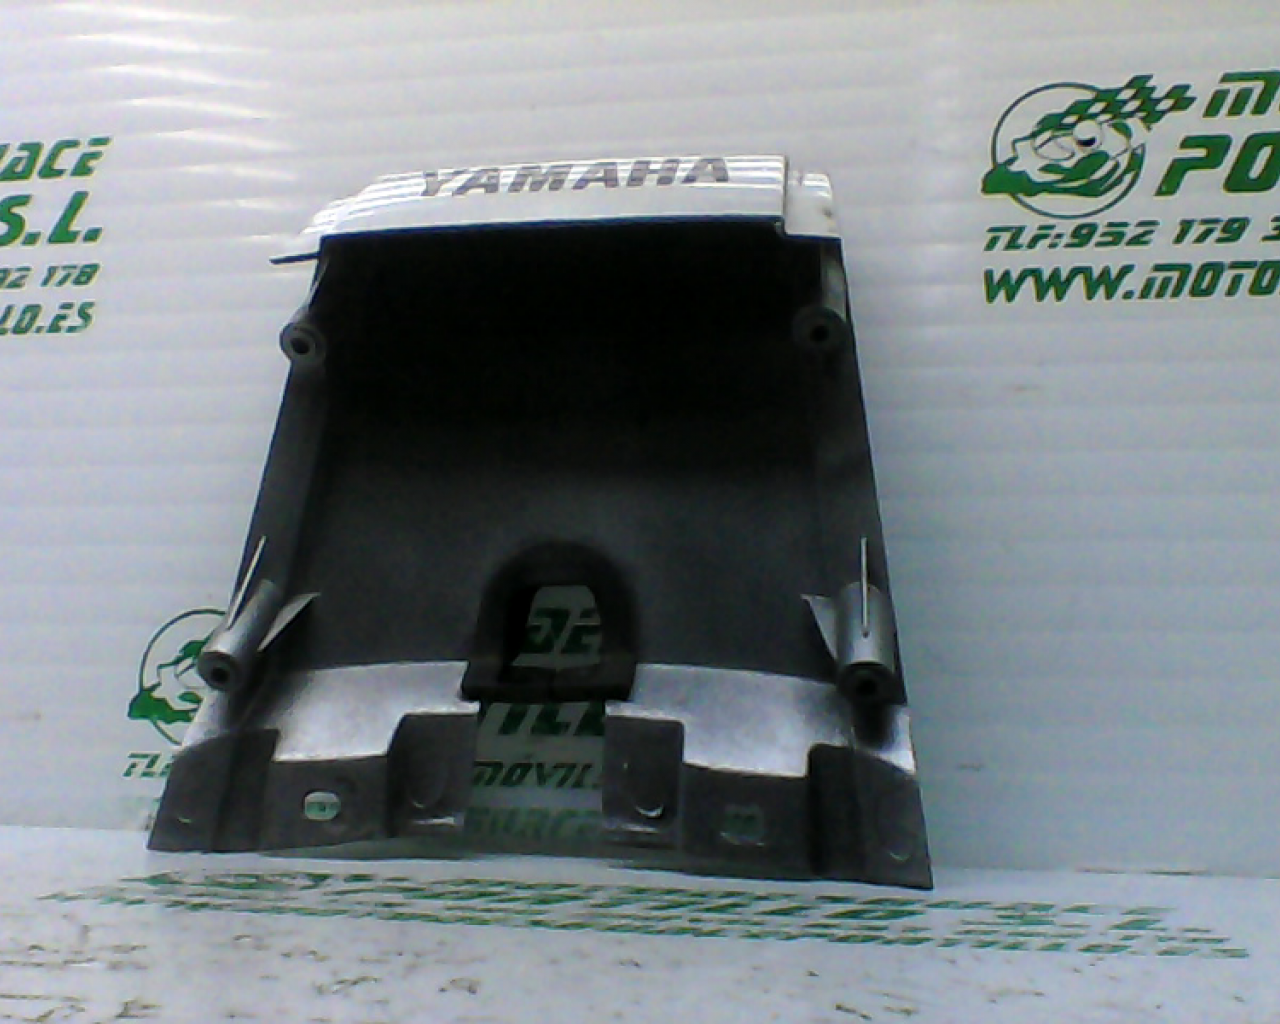 Cierre colín Yamaha YBR 125 i (2007-2008)